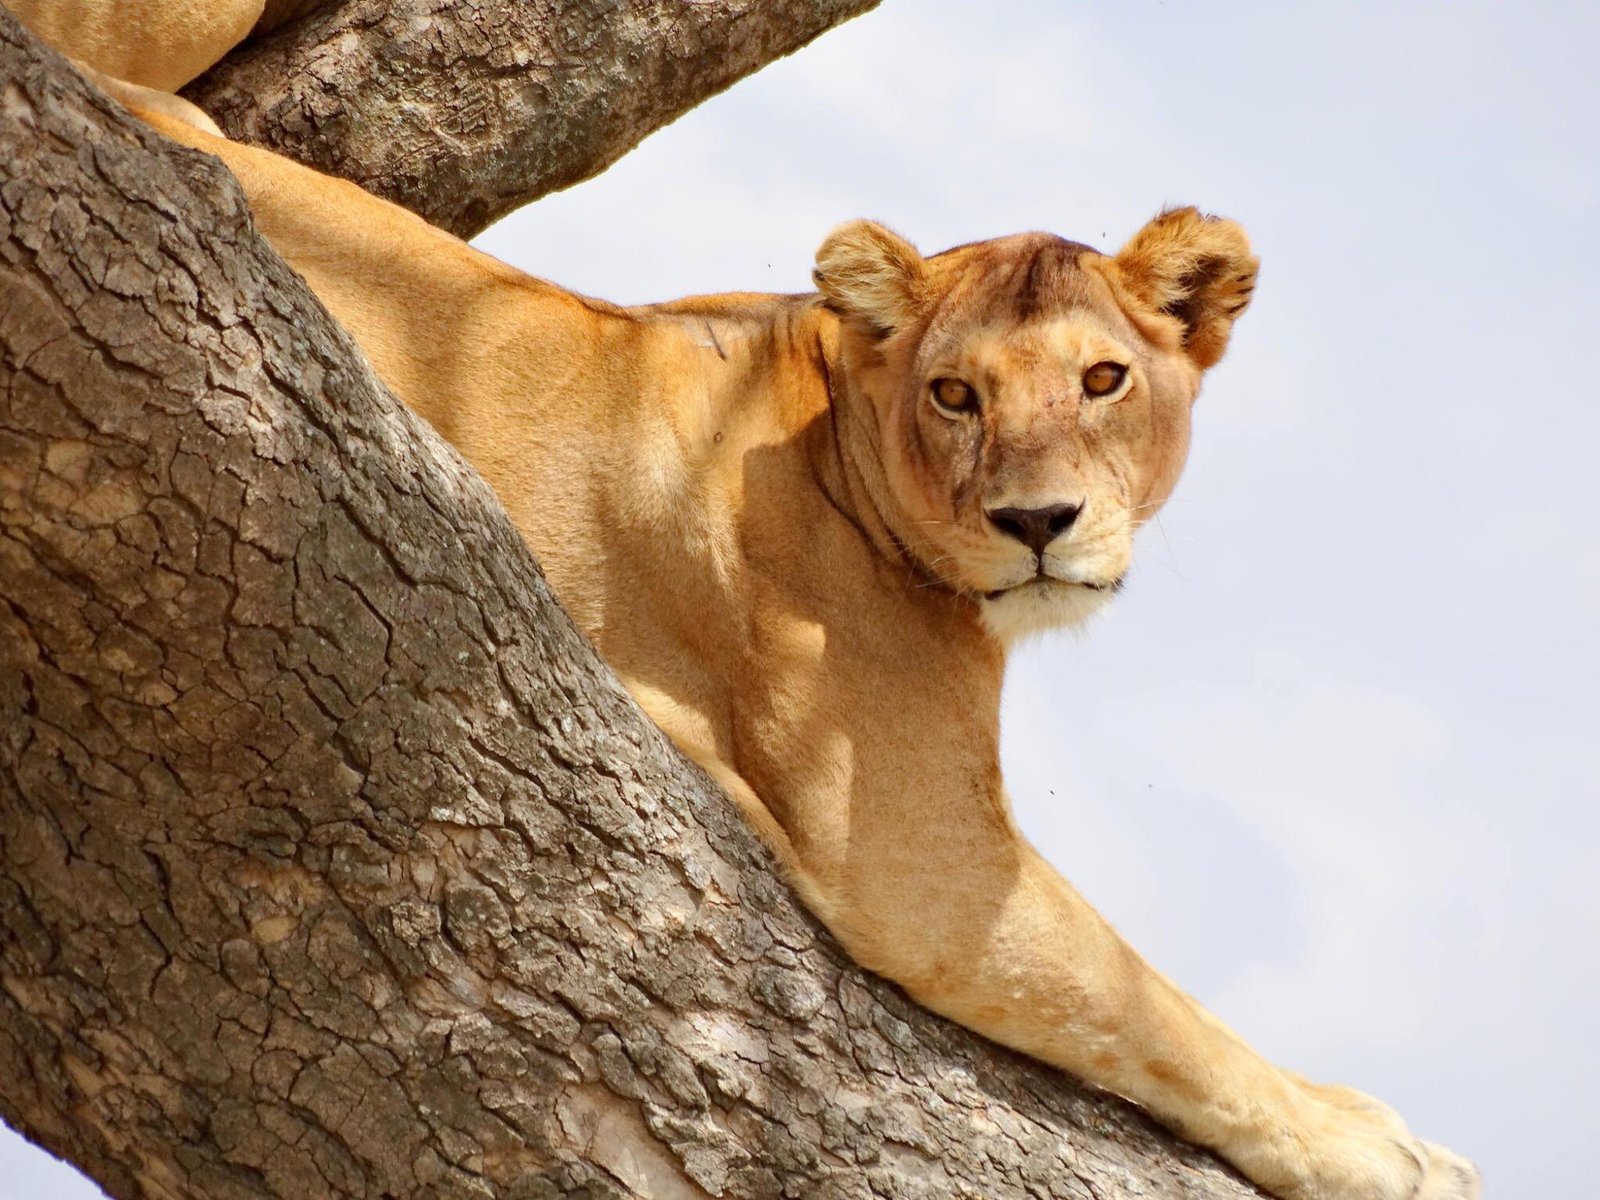 Best Way to Choose a Good Affordable Tanzania Safari Company